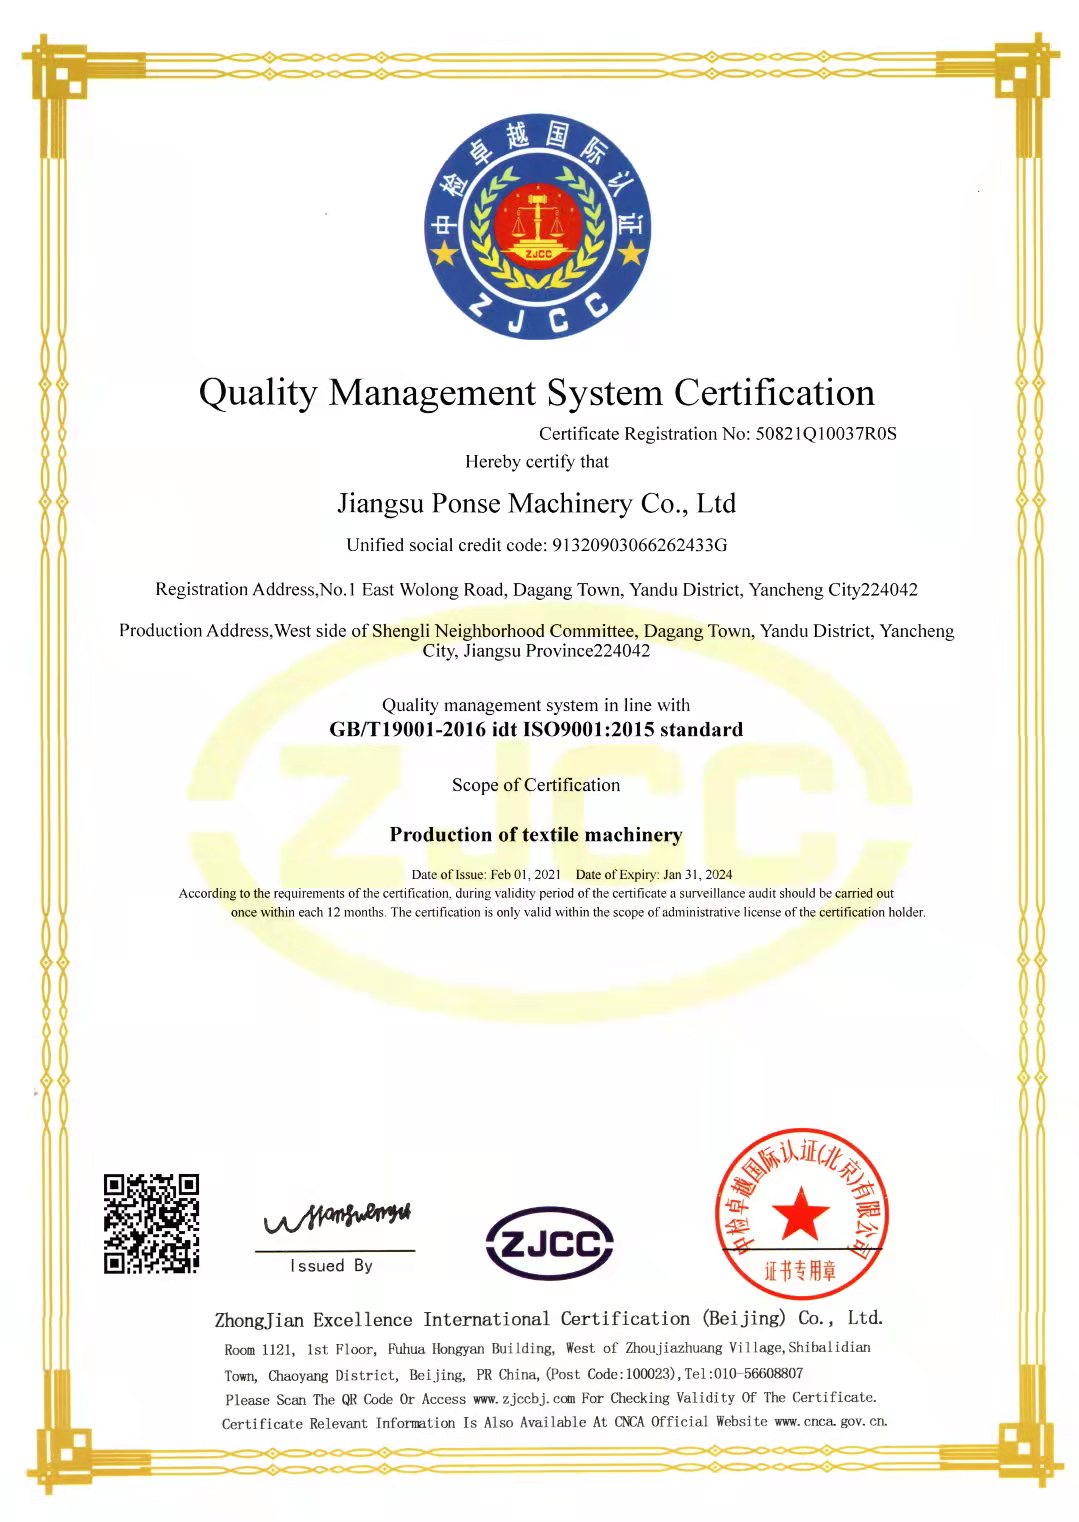 Quality Management System Certufication